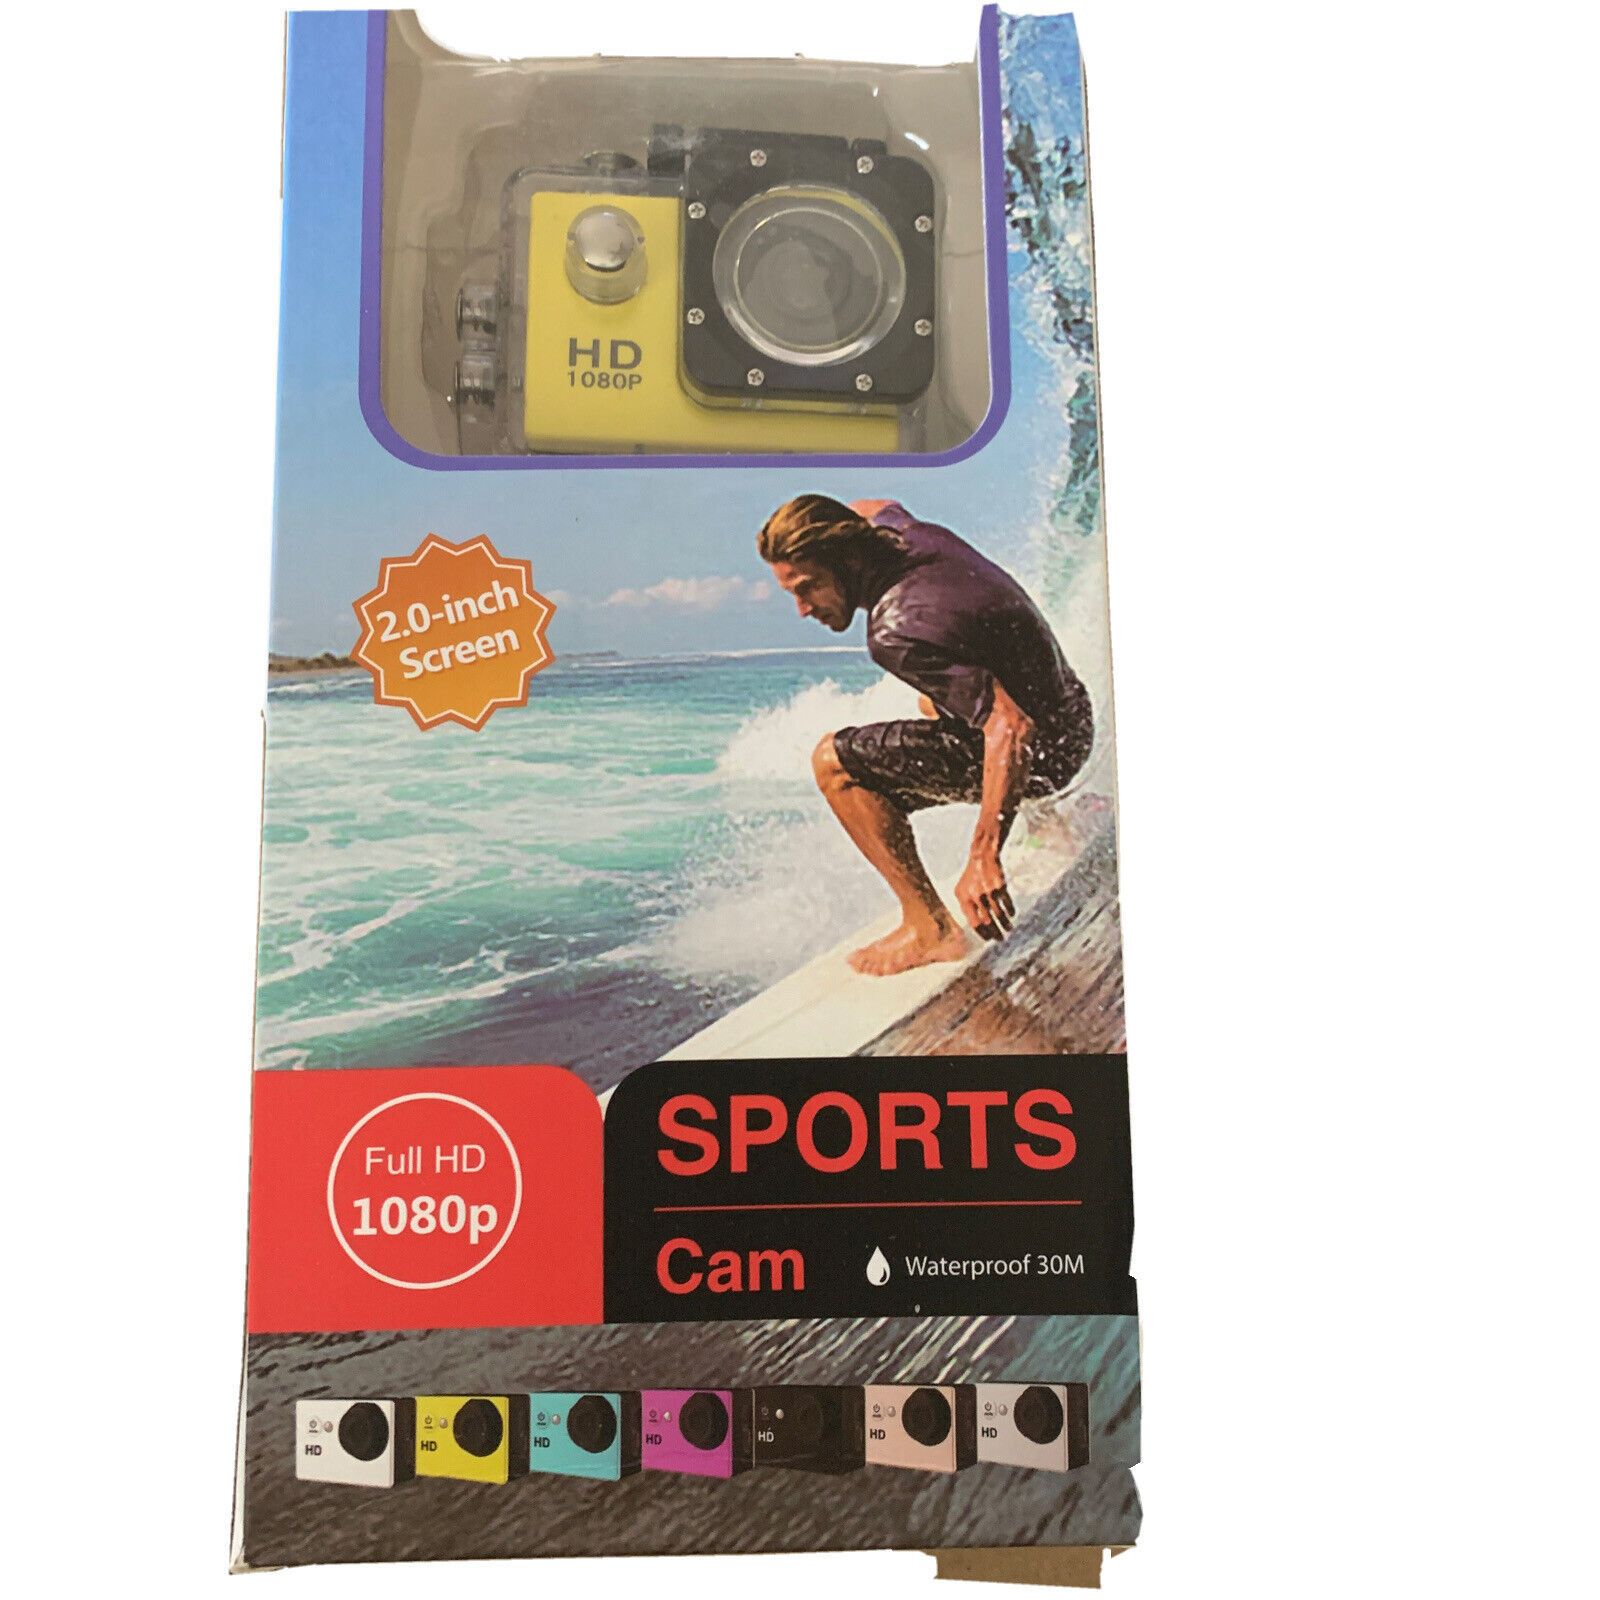 Sports Cam 1080P Full HD 2.0 Inch Screen Waterproof 30M Action Camera (Yellow)